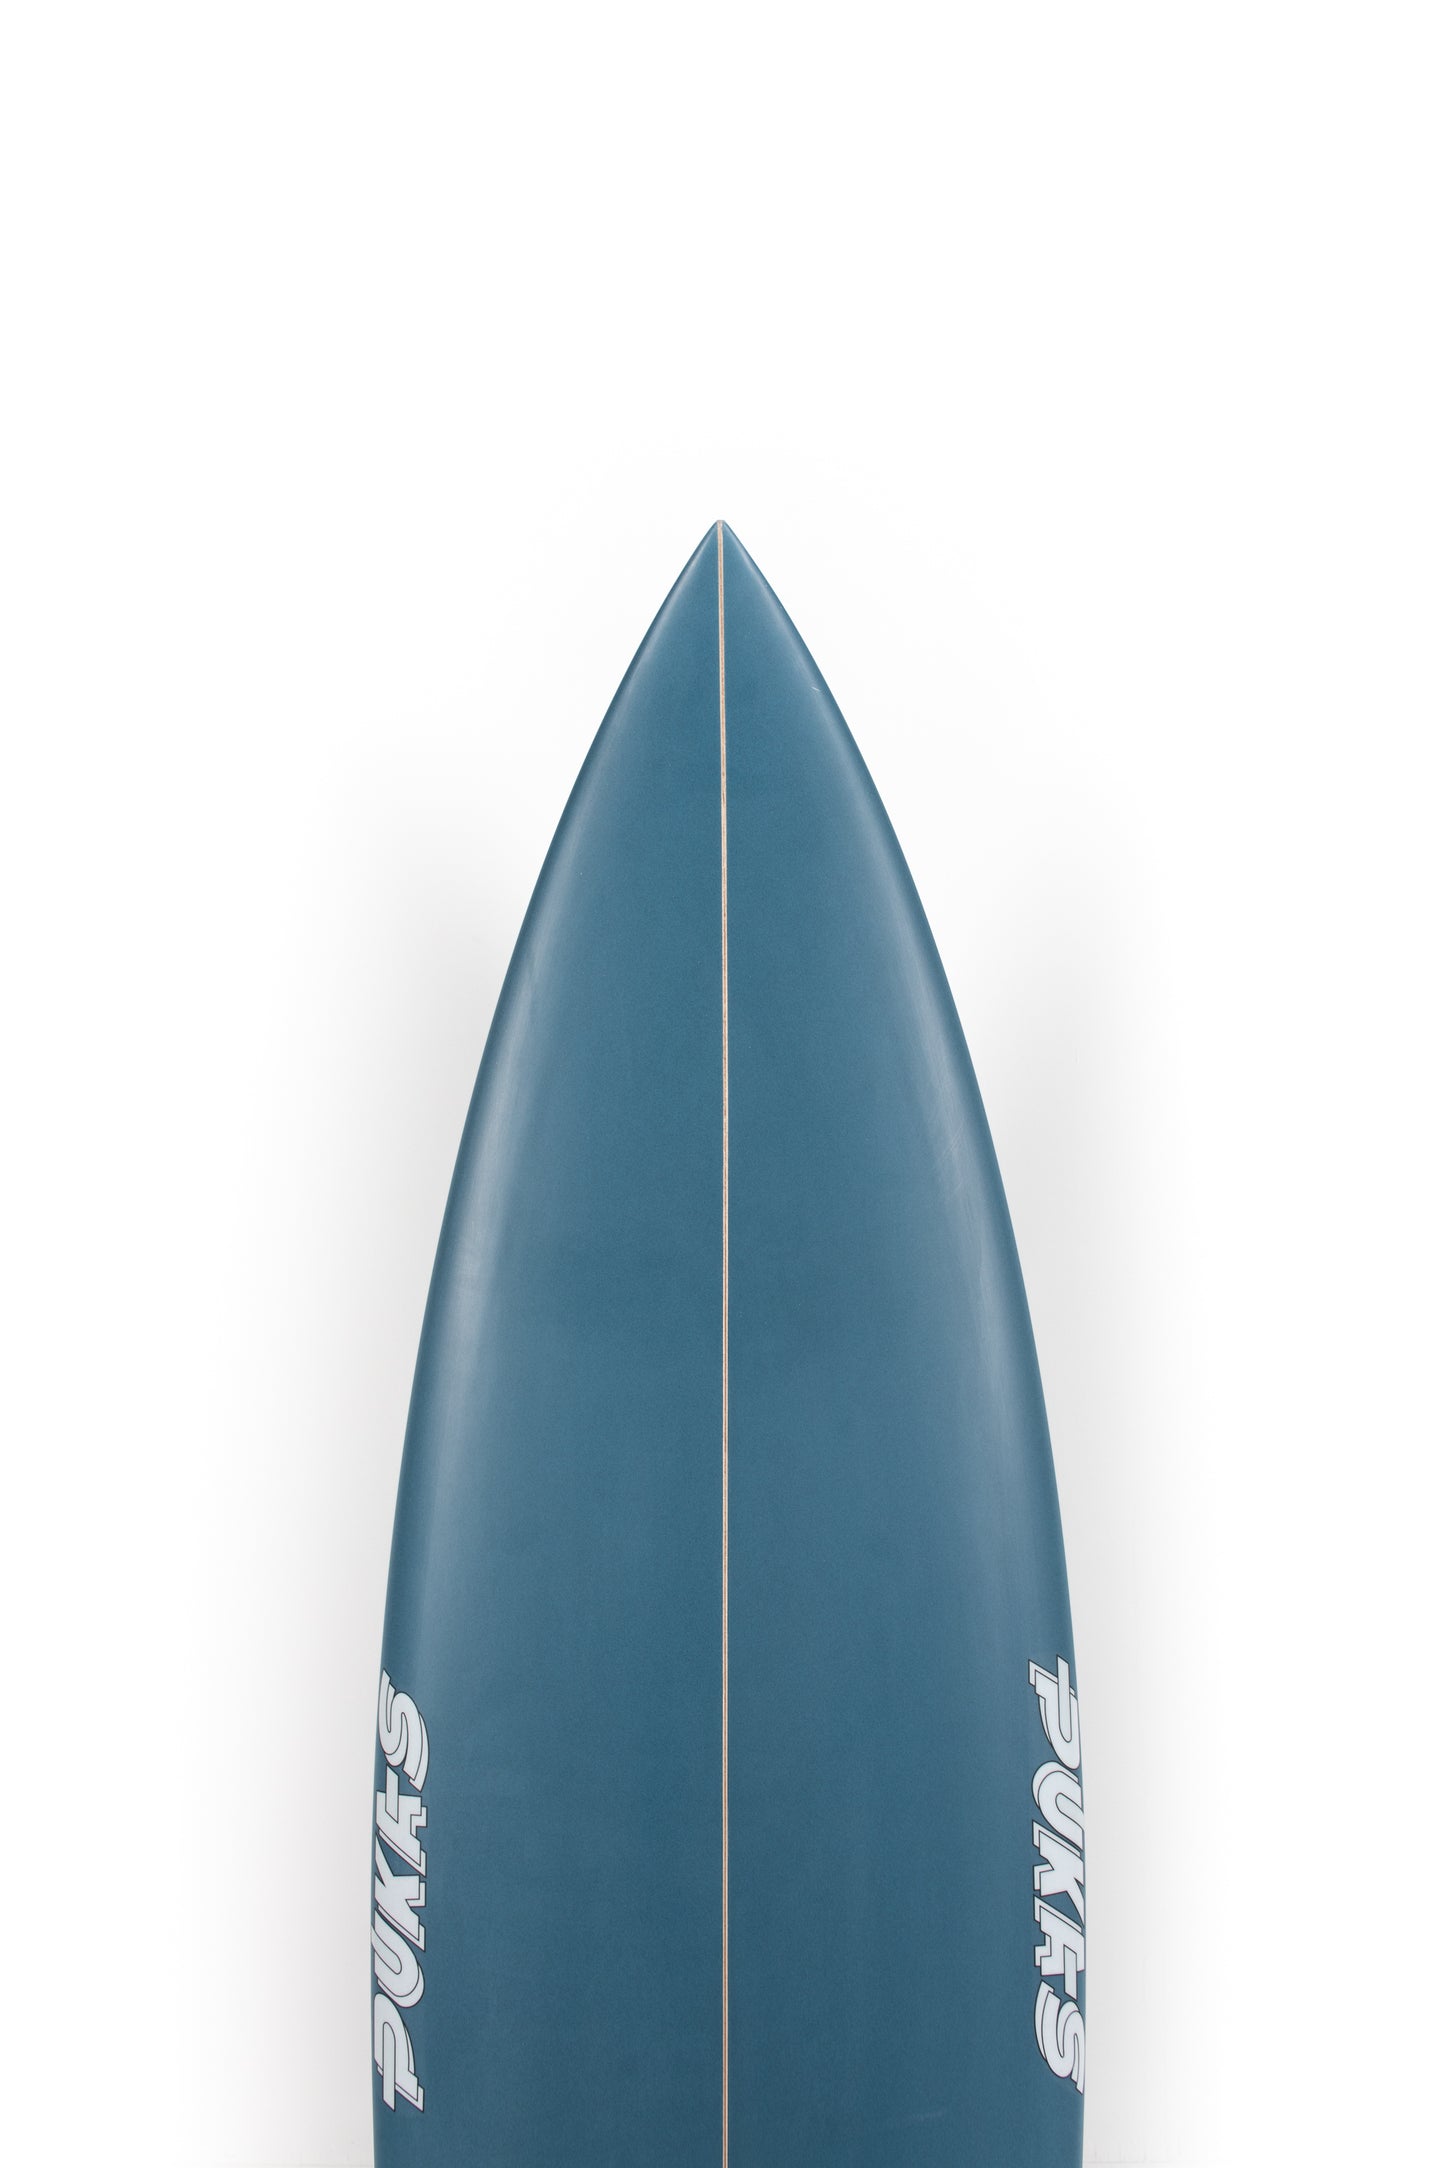 
                  
                    Pukas Surf Shop - Pukas Surfboard - DARK by Axel Lorentz - 6’1” x 19,63 x 2,4 - 30,67L - AX09204
                  
                